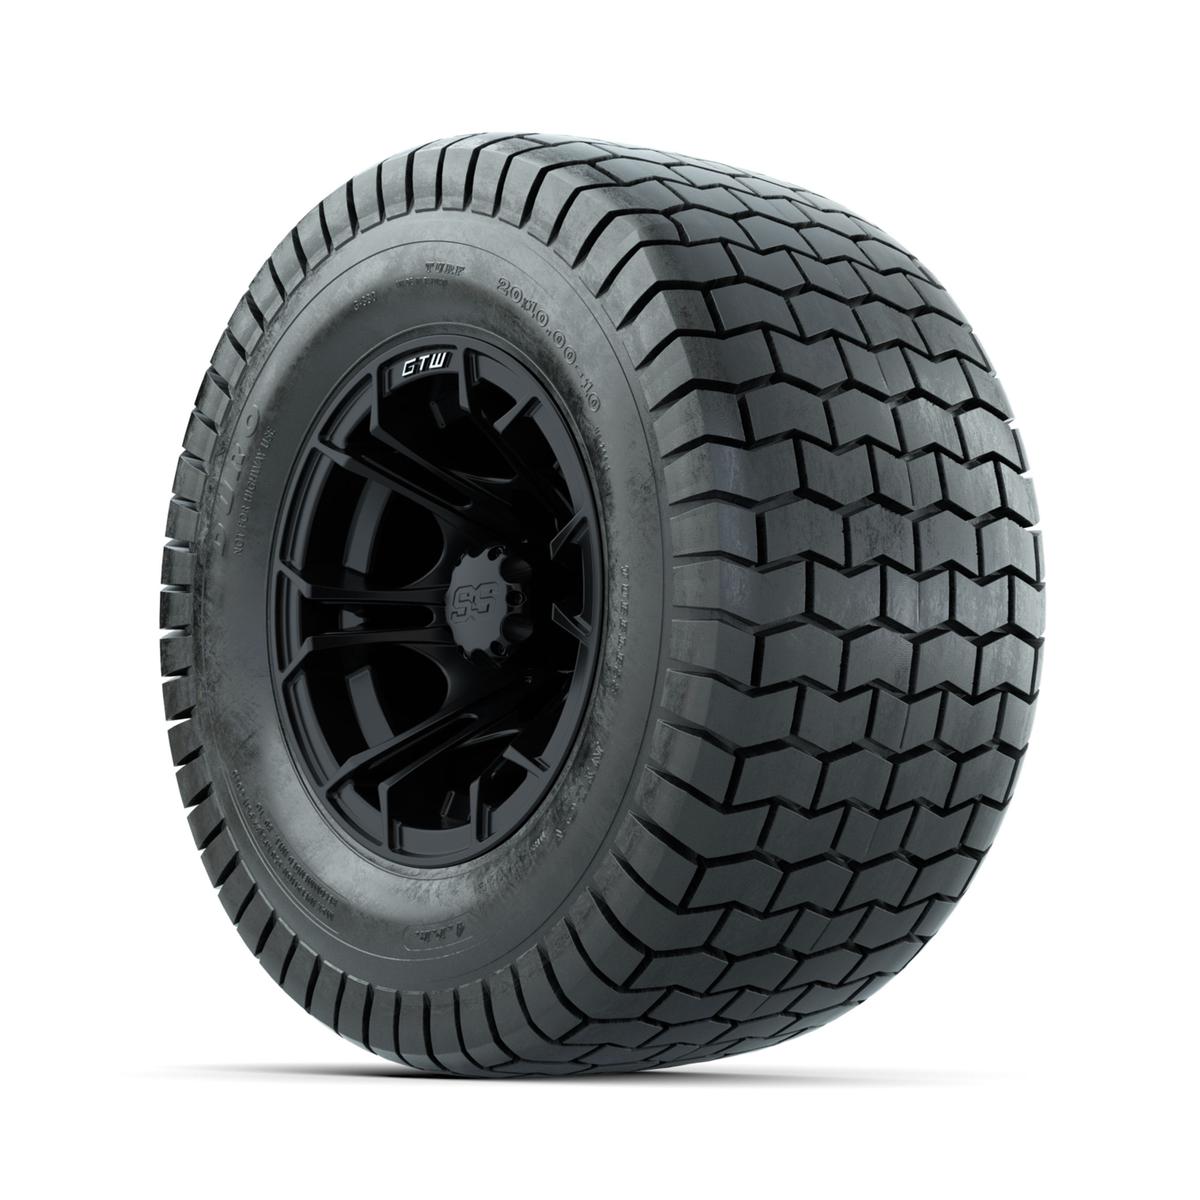 GTW Spyder Matte Black 10 in Wheels with 20x10-10 Duro Soft Street Tires – Full Set